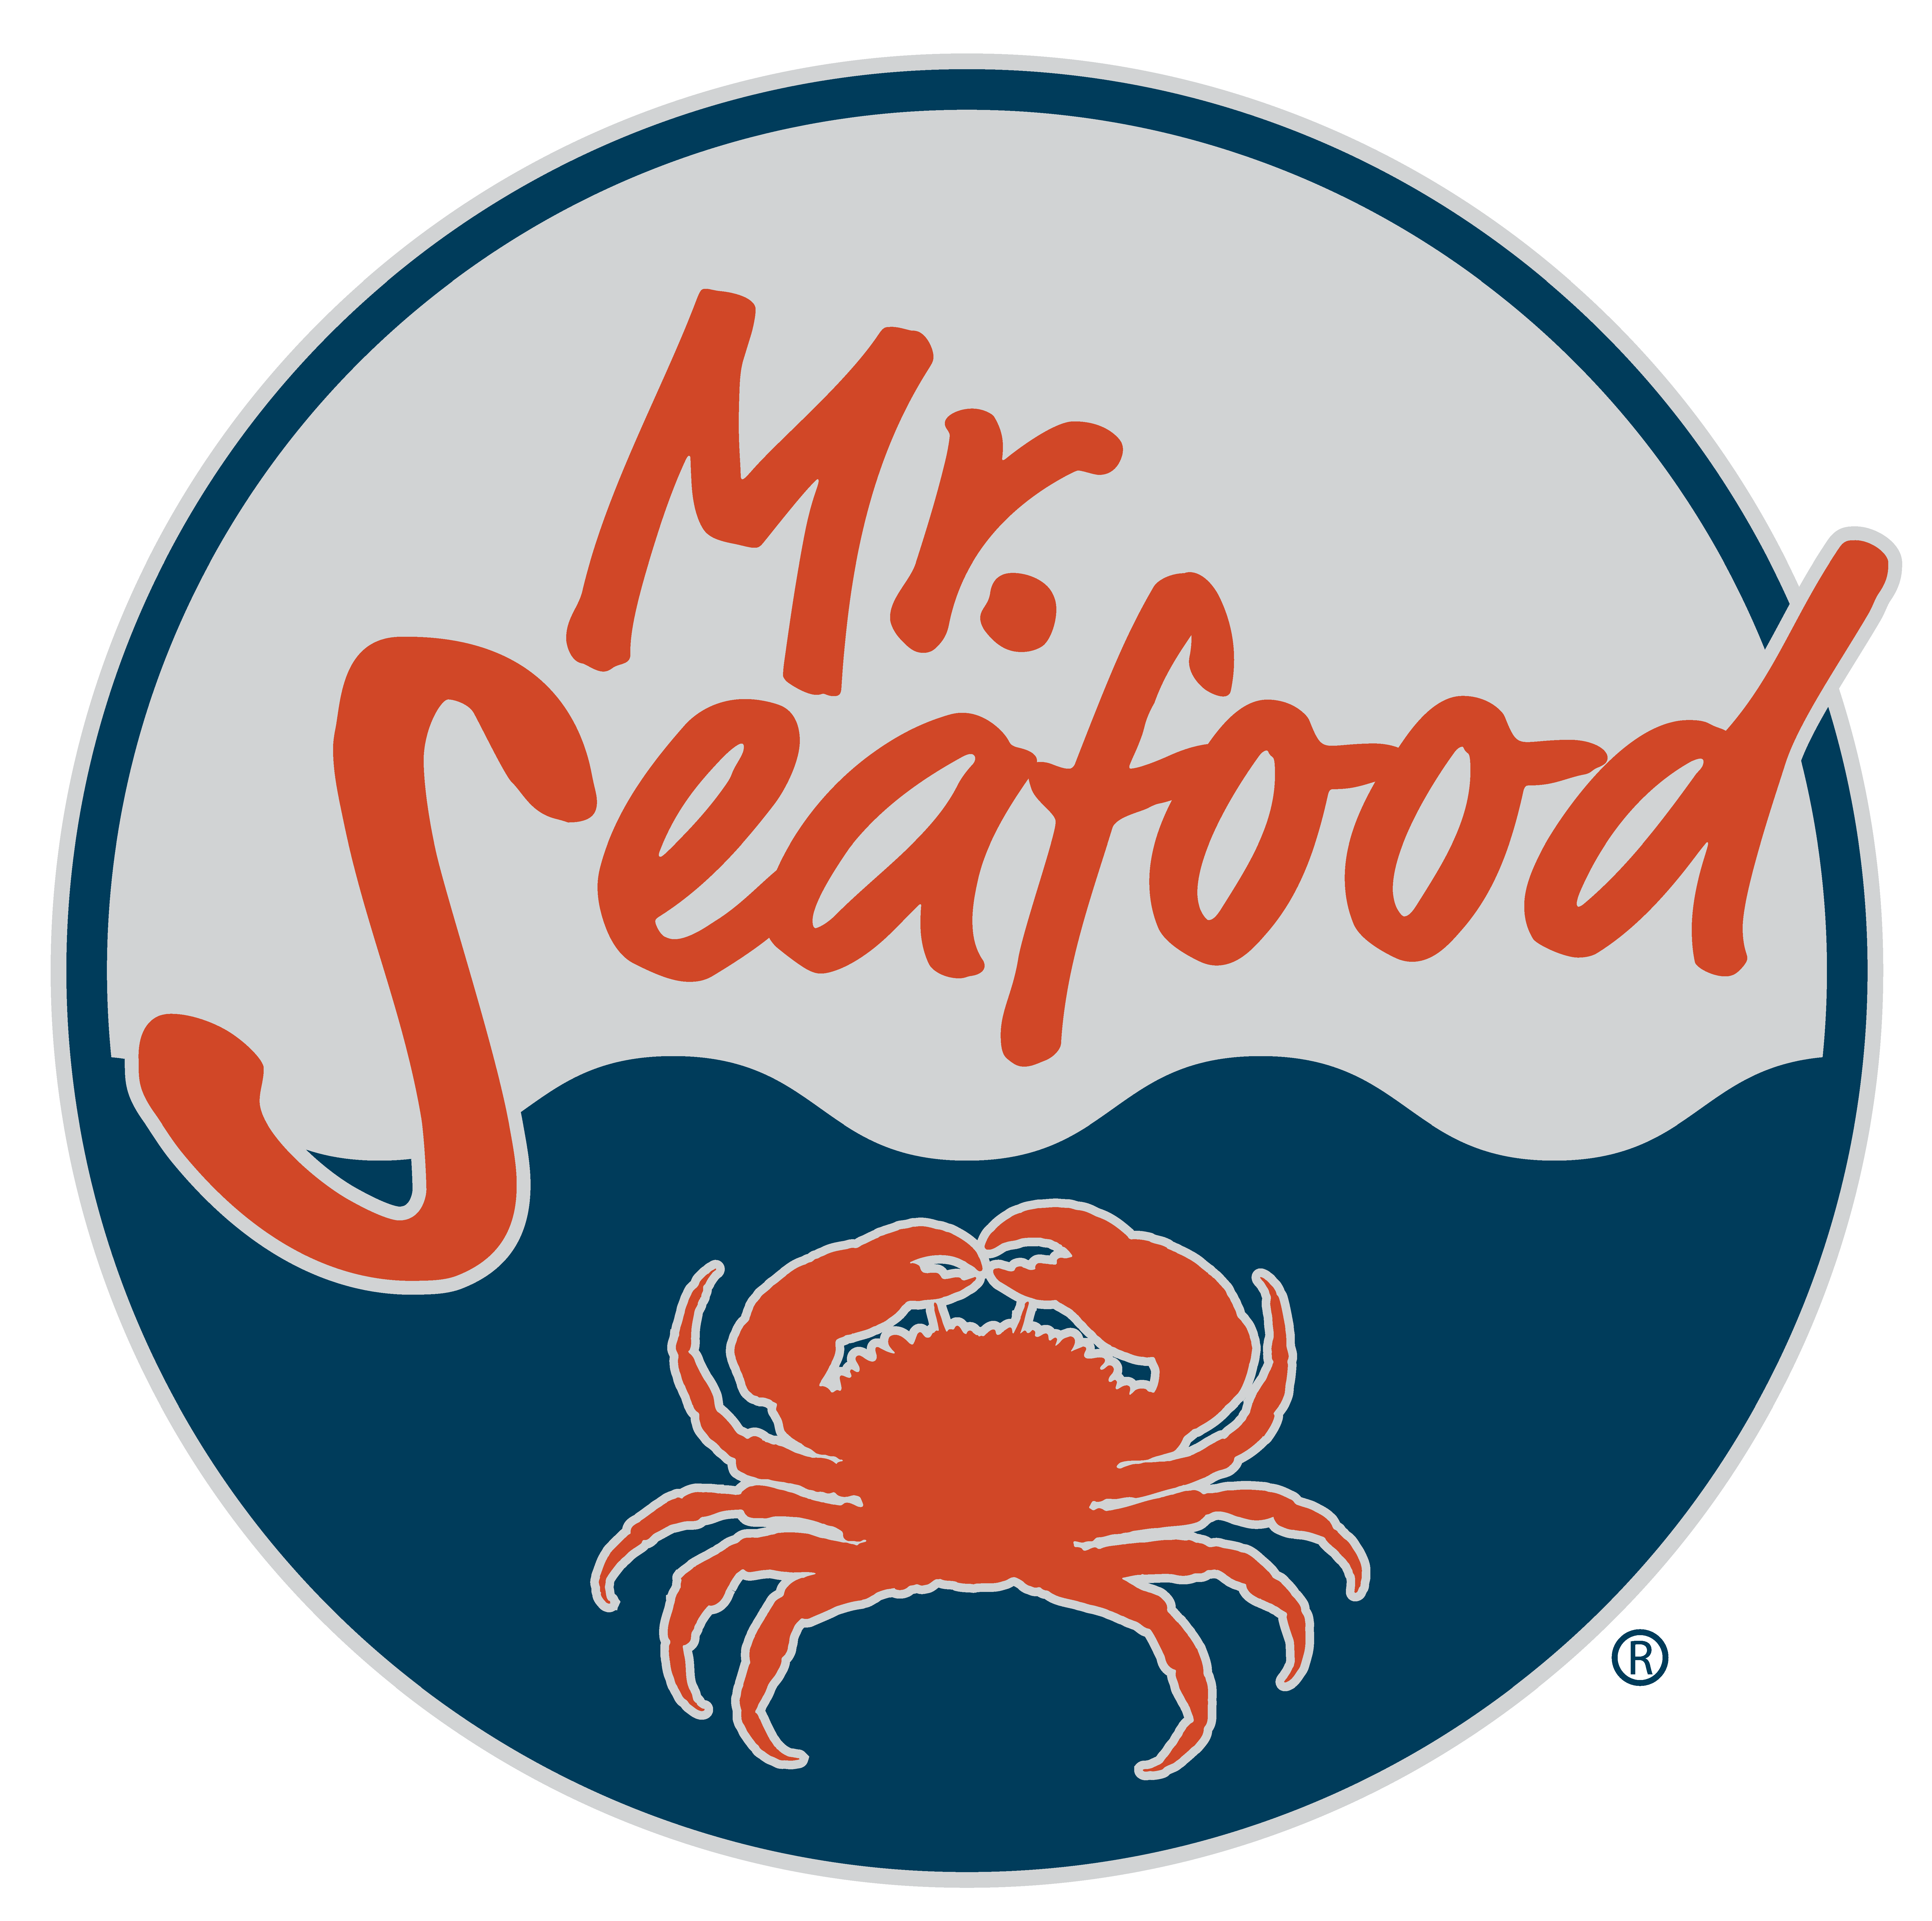 Mr. Seafood logo